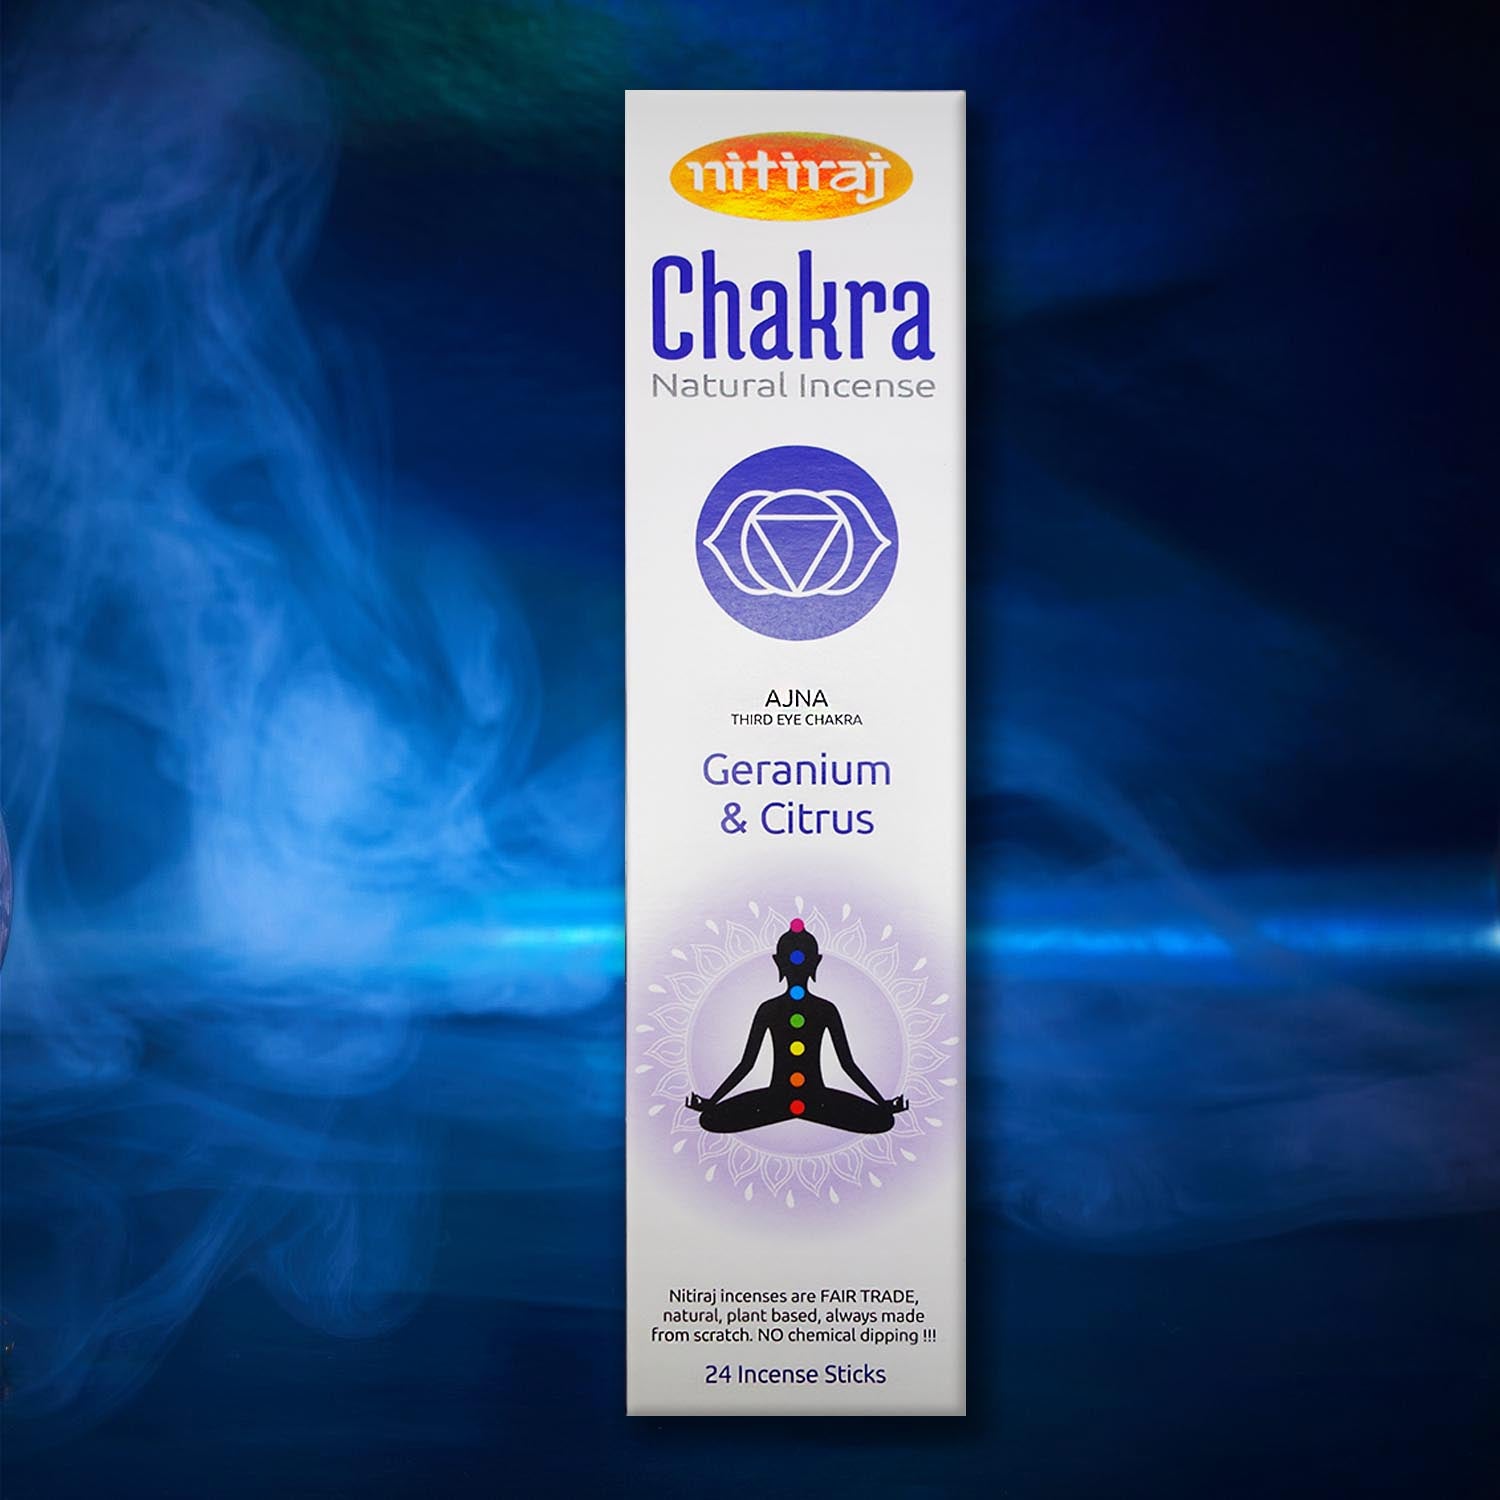 Nitiraj Natural Chakra Incense - Geranium & Citrus - Third Eye Chakra Incense